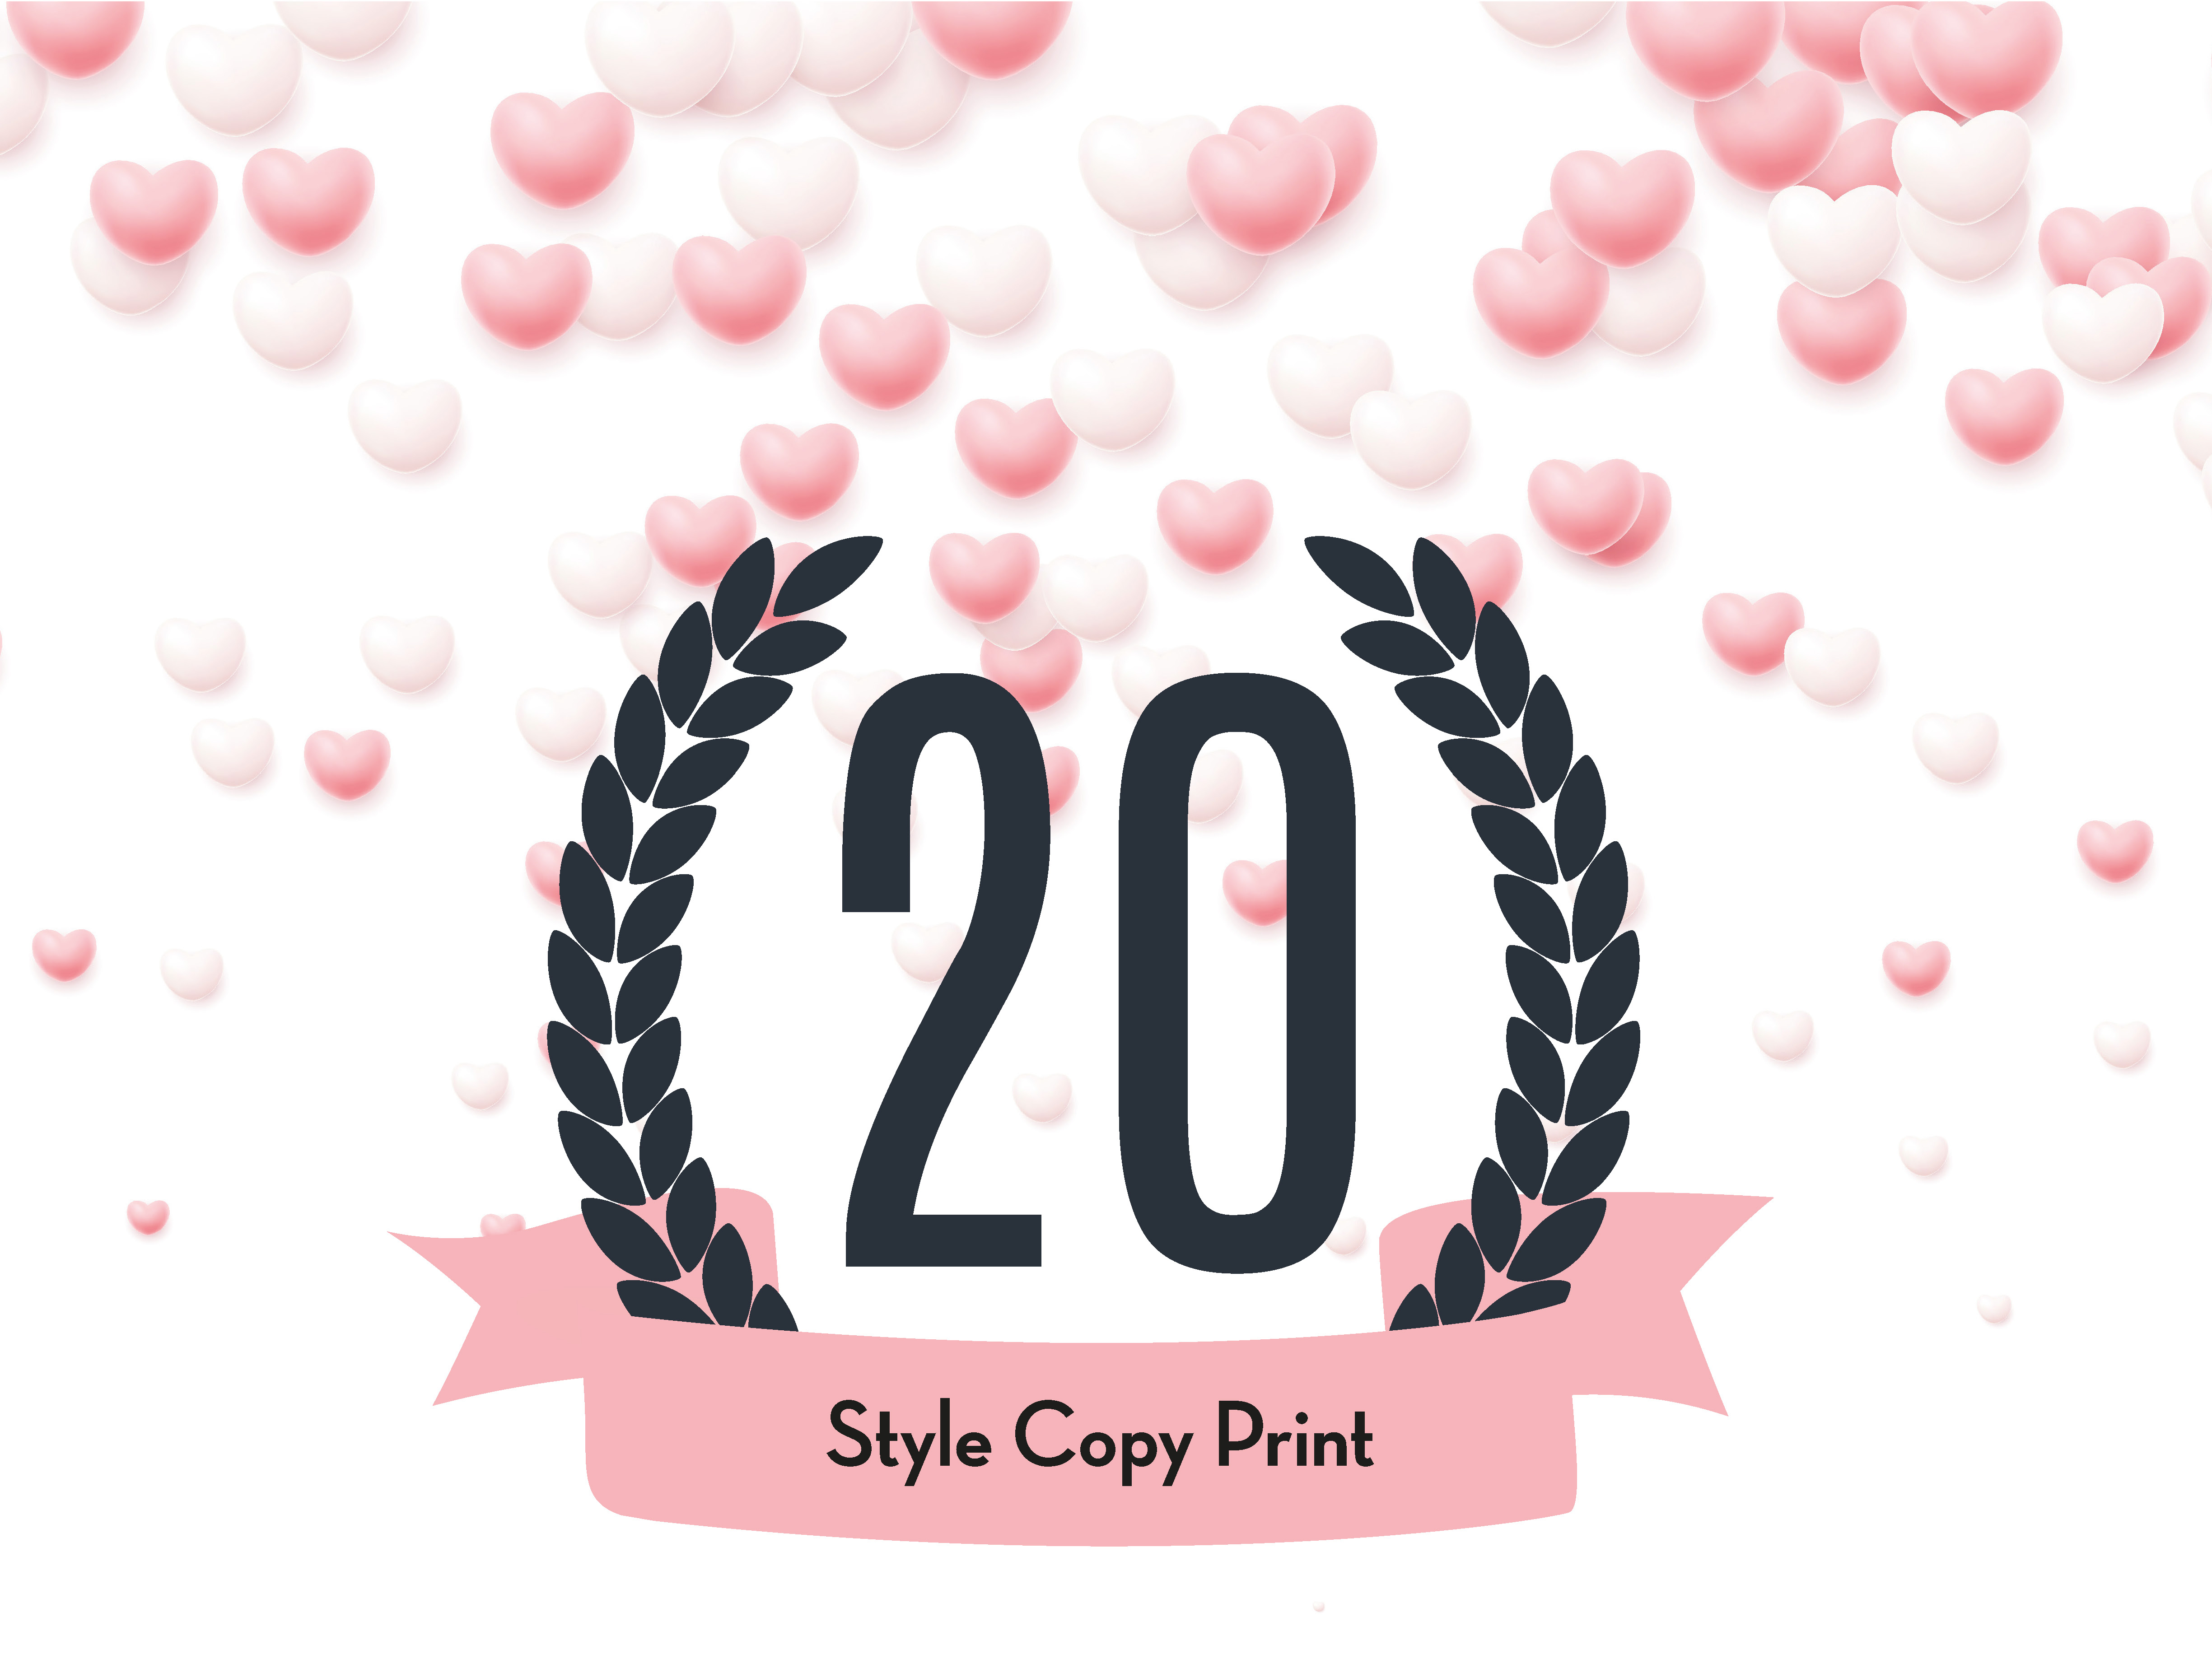 Style Copy Print - 2002 tot 2022